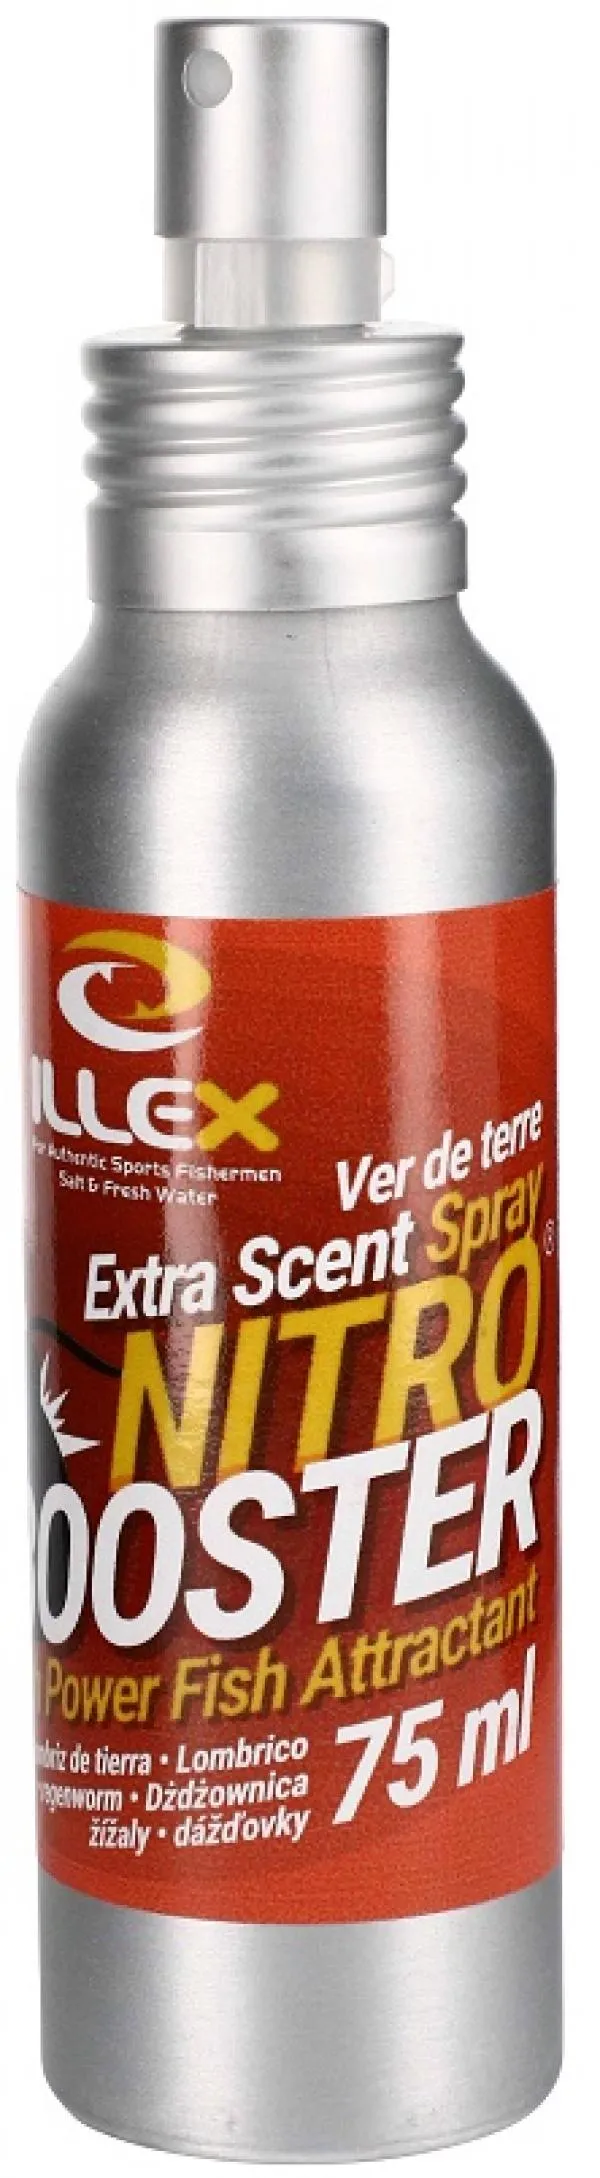 Illex Nitro Booster spray 75ml - féreg